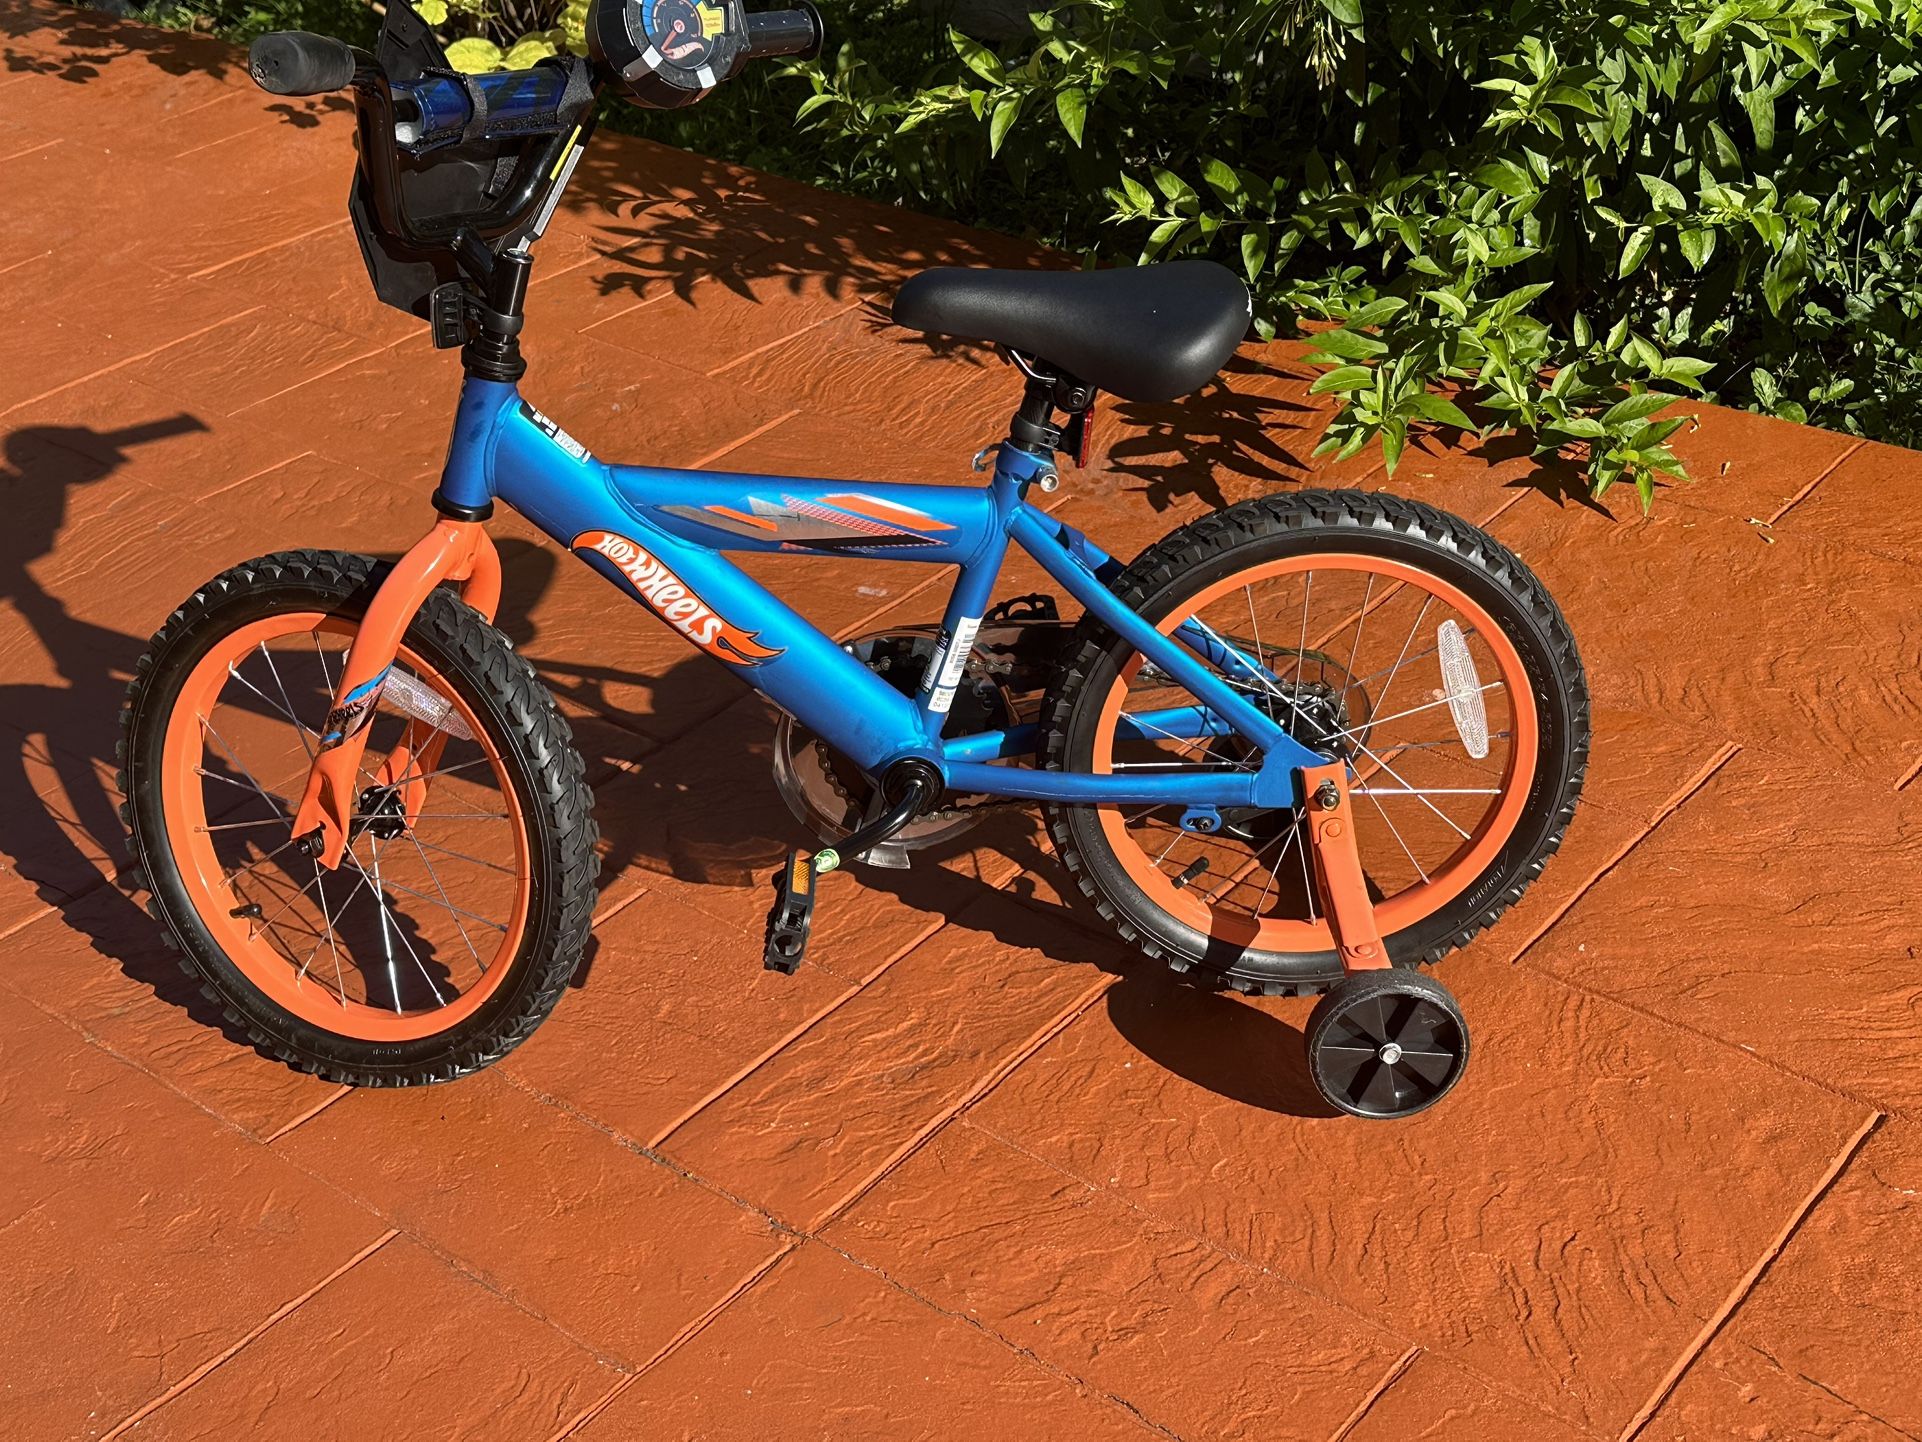 Dynacraft Hot Wheels 16-inch Boys BMX Bike For Children 5-7 years